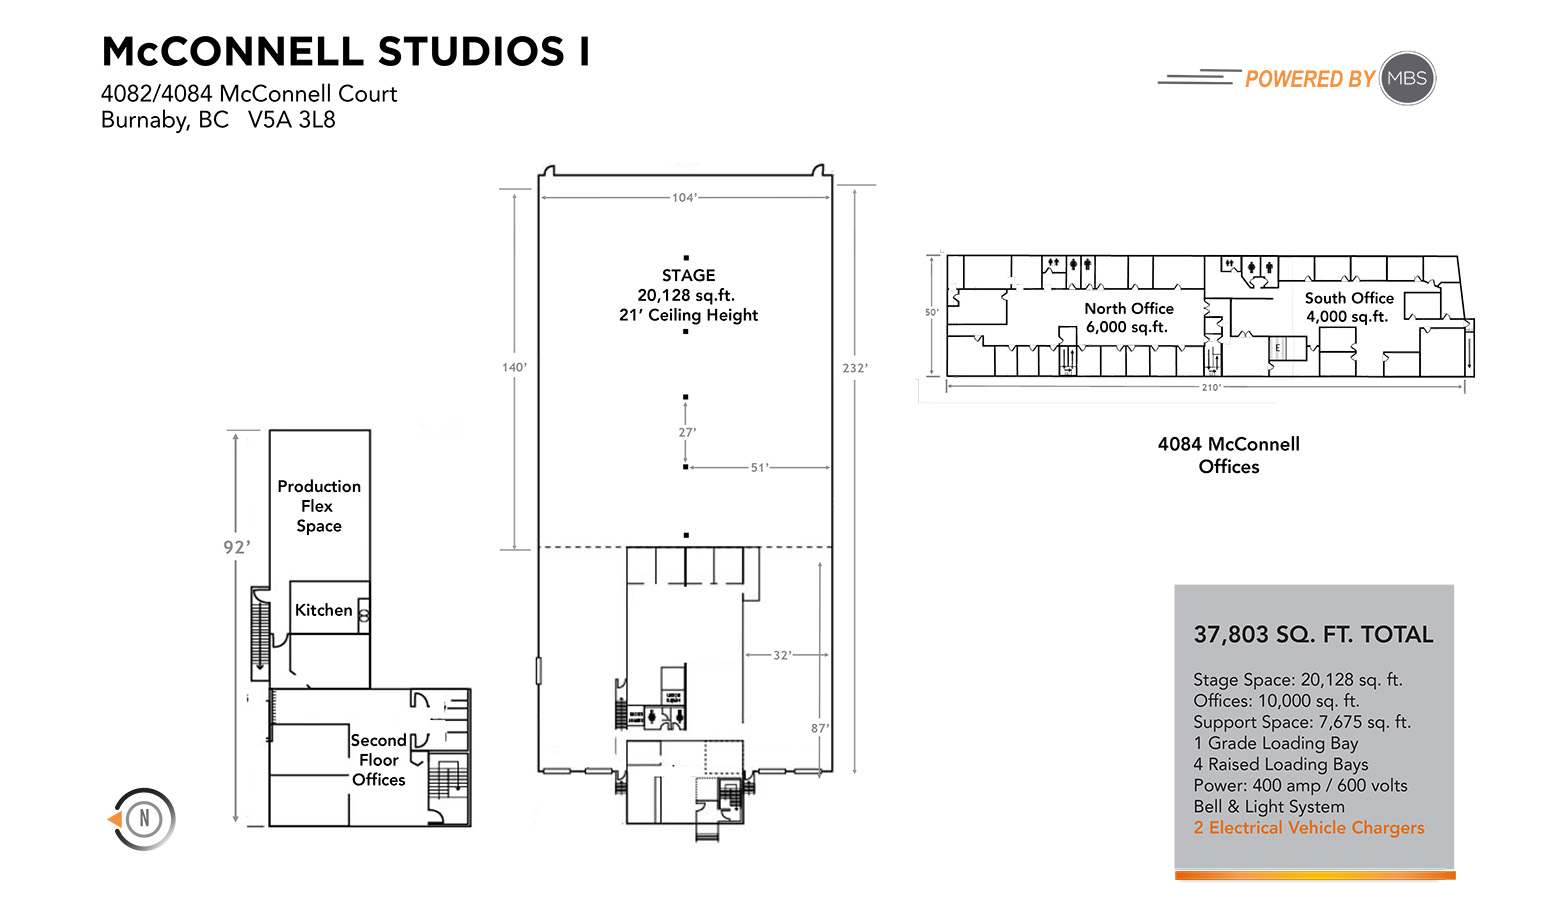 McConnell Studios Floorplan - MBS Group